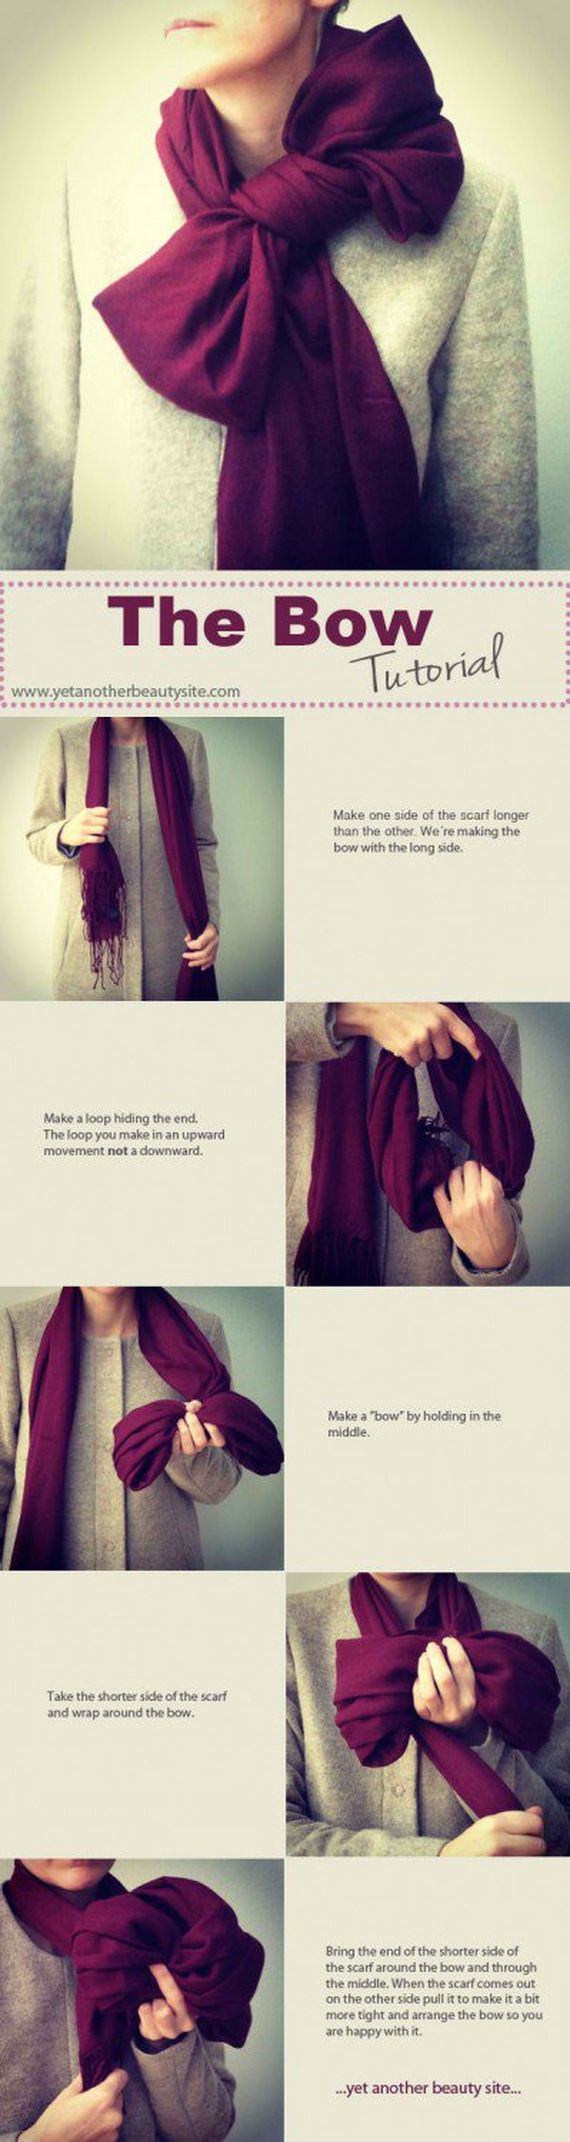 04-scarf-winter